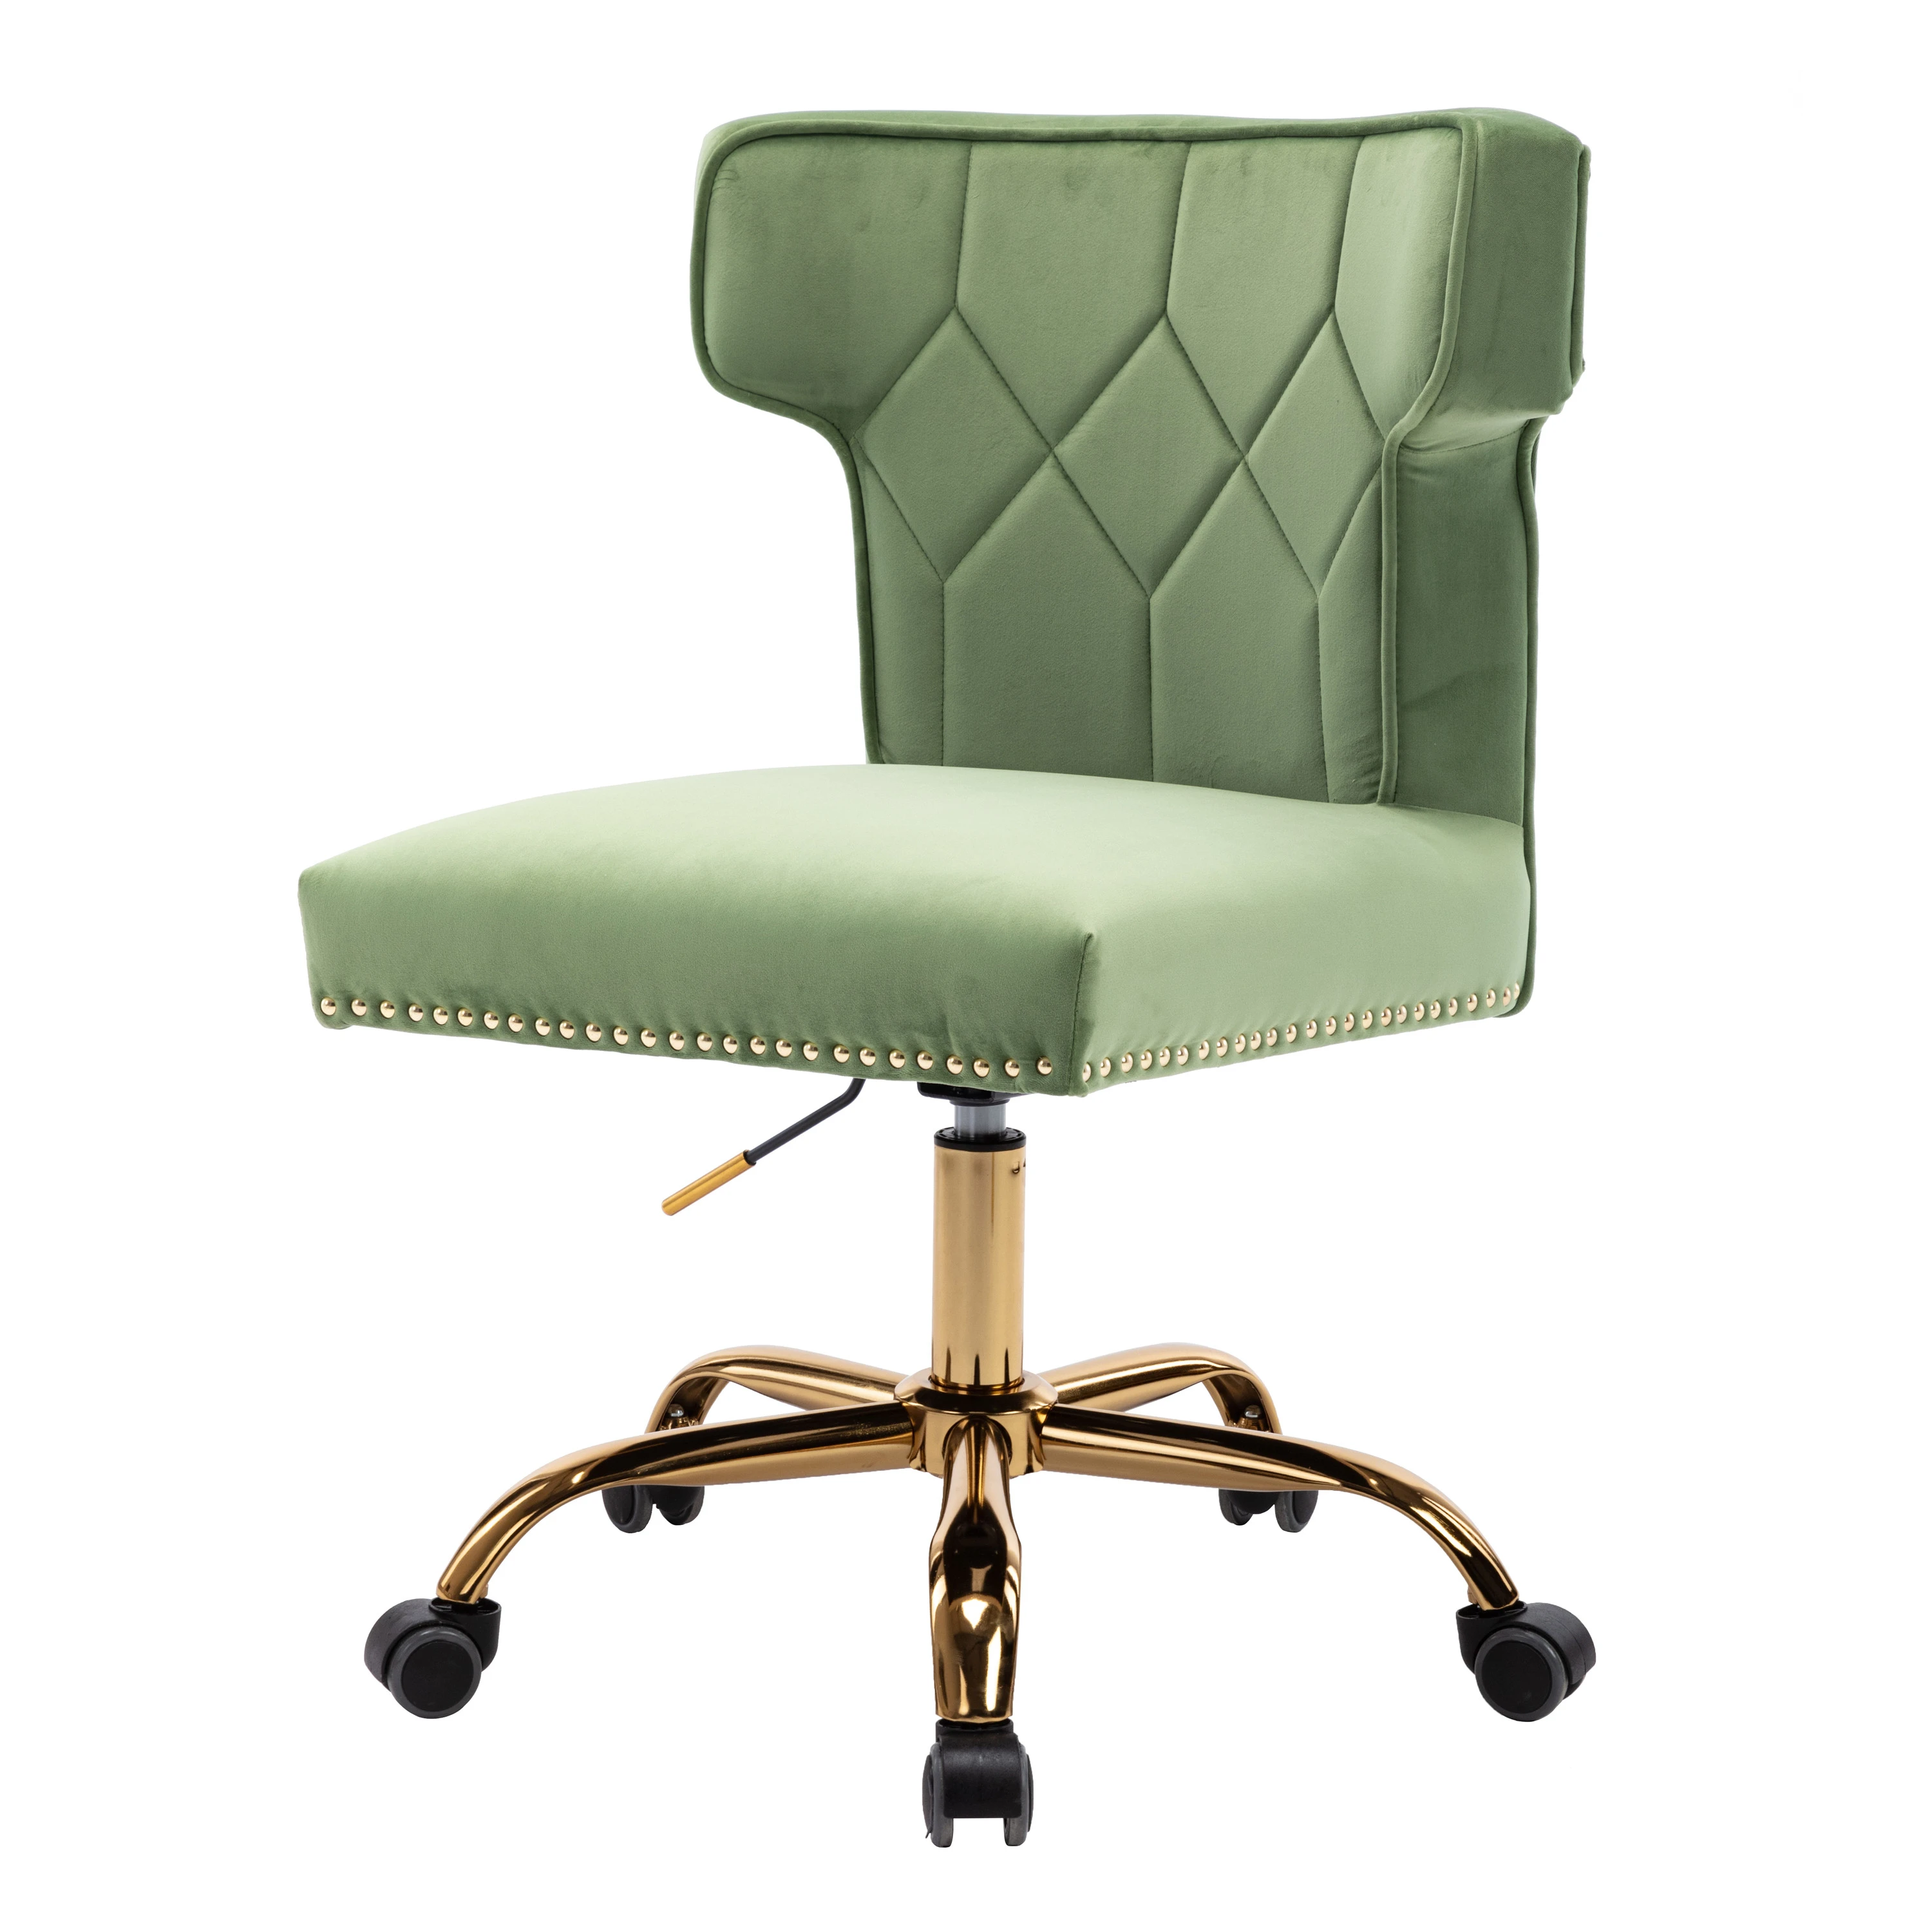 

Office shairs velvet swivel office chairs living leisure arm pedicure chair Velvet Fabric Adjustable Hight green